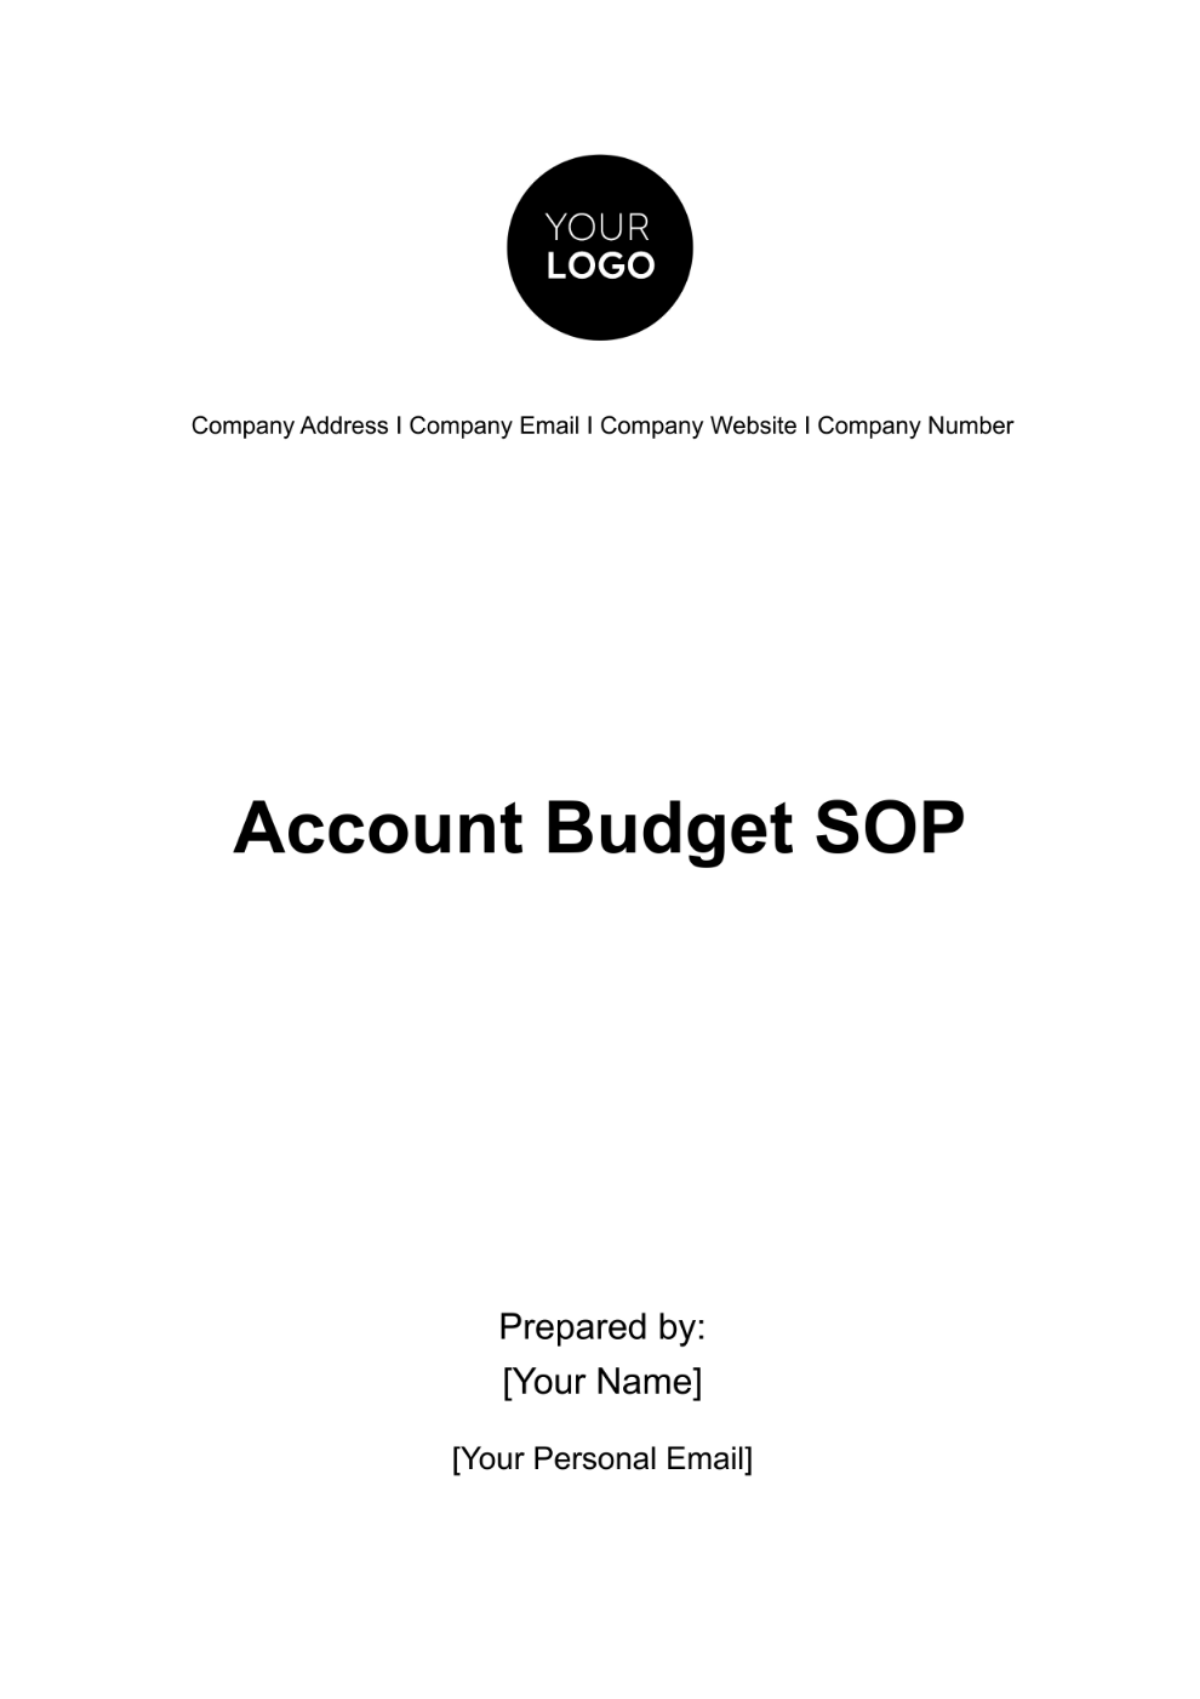 Account Budget SOP Template